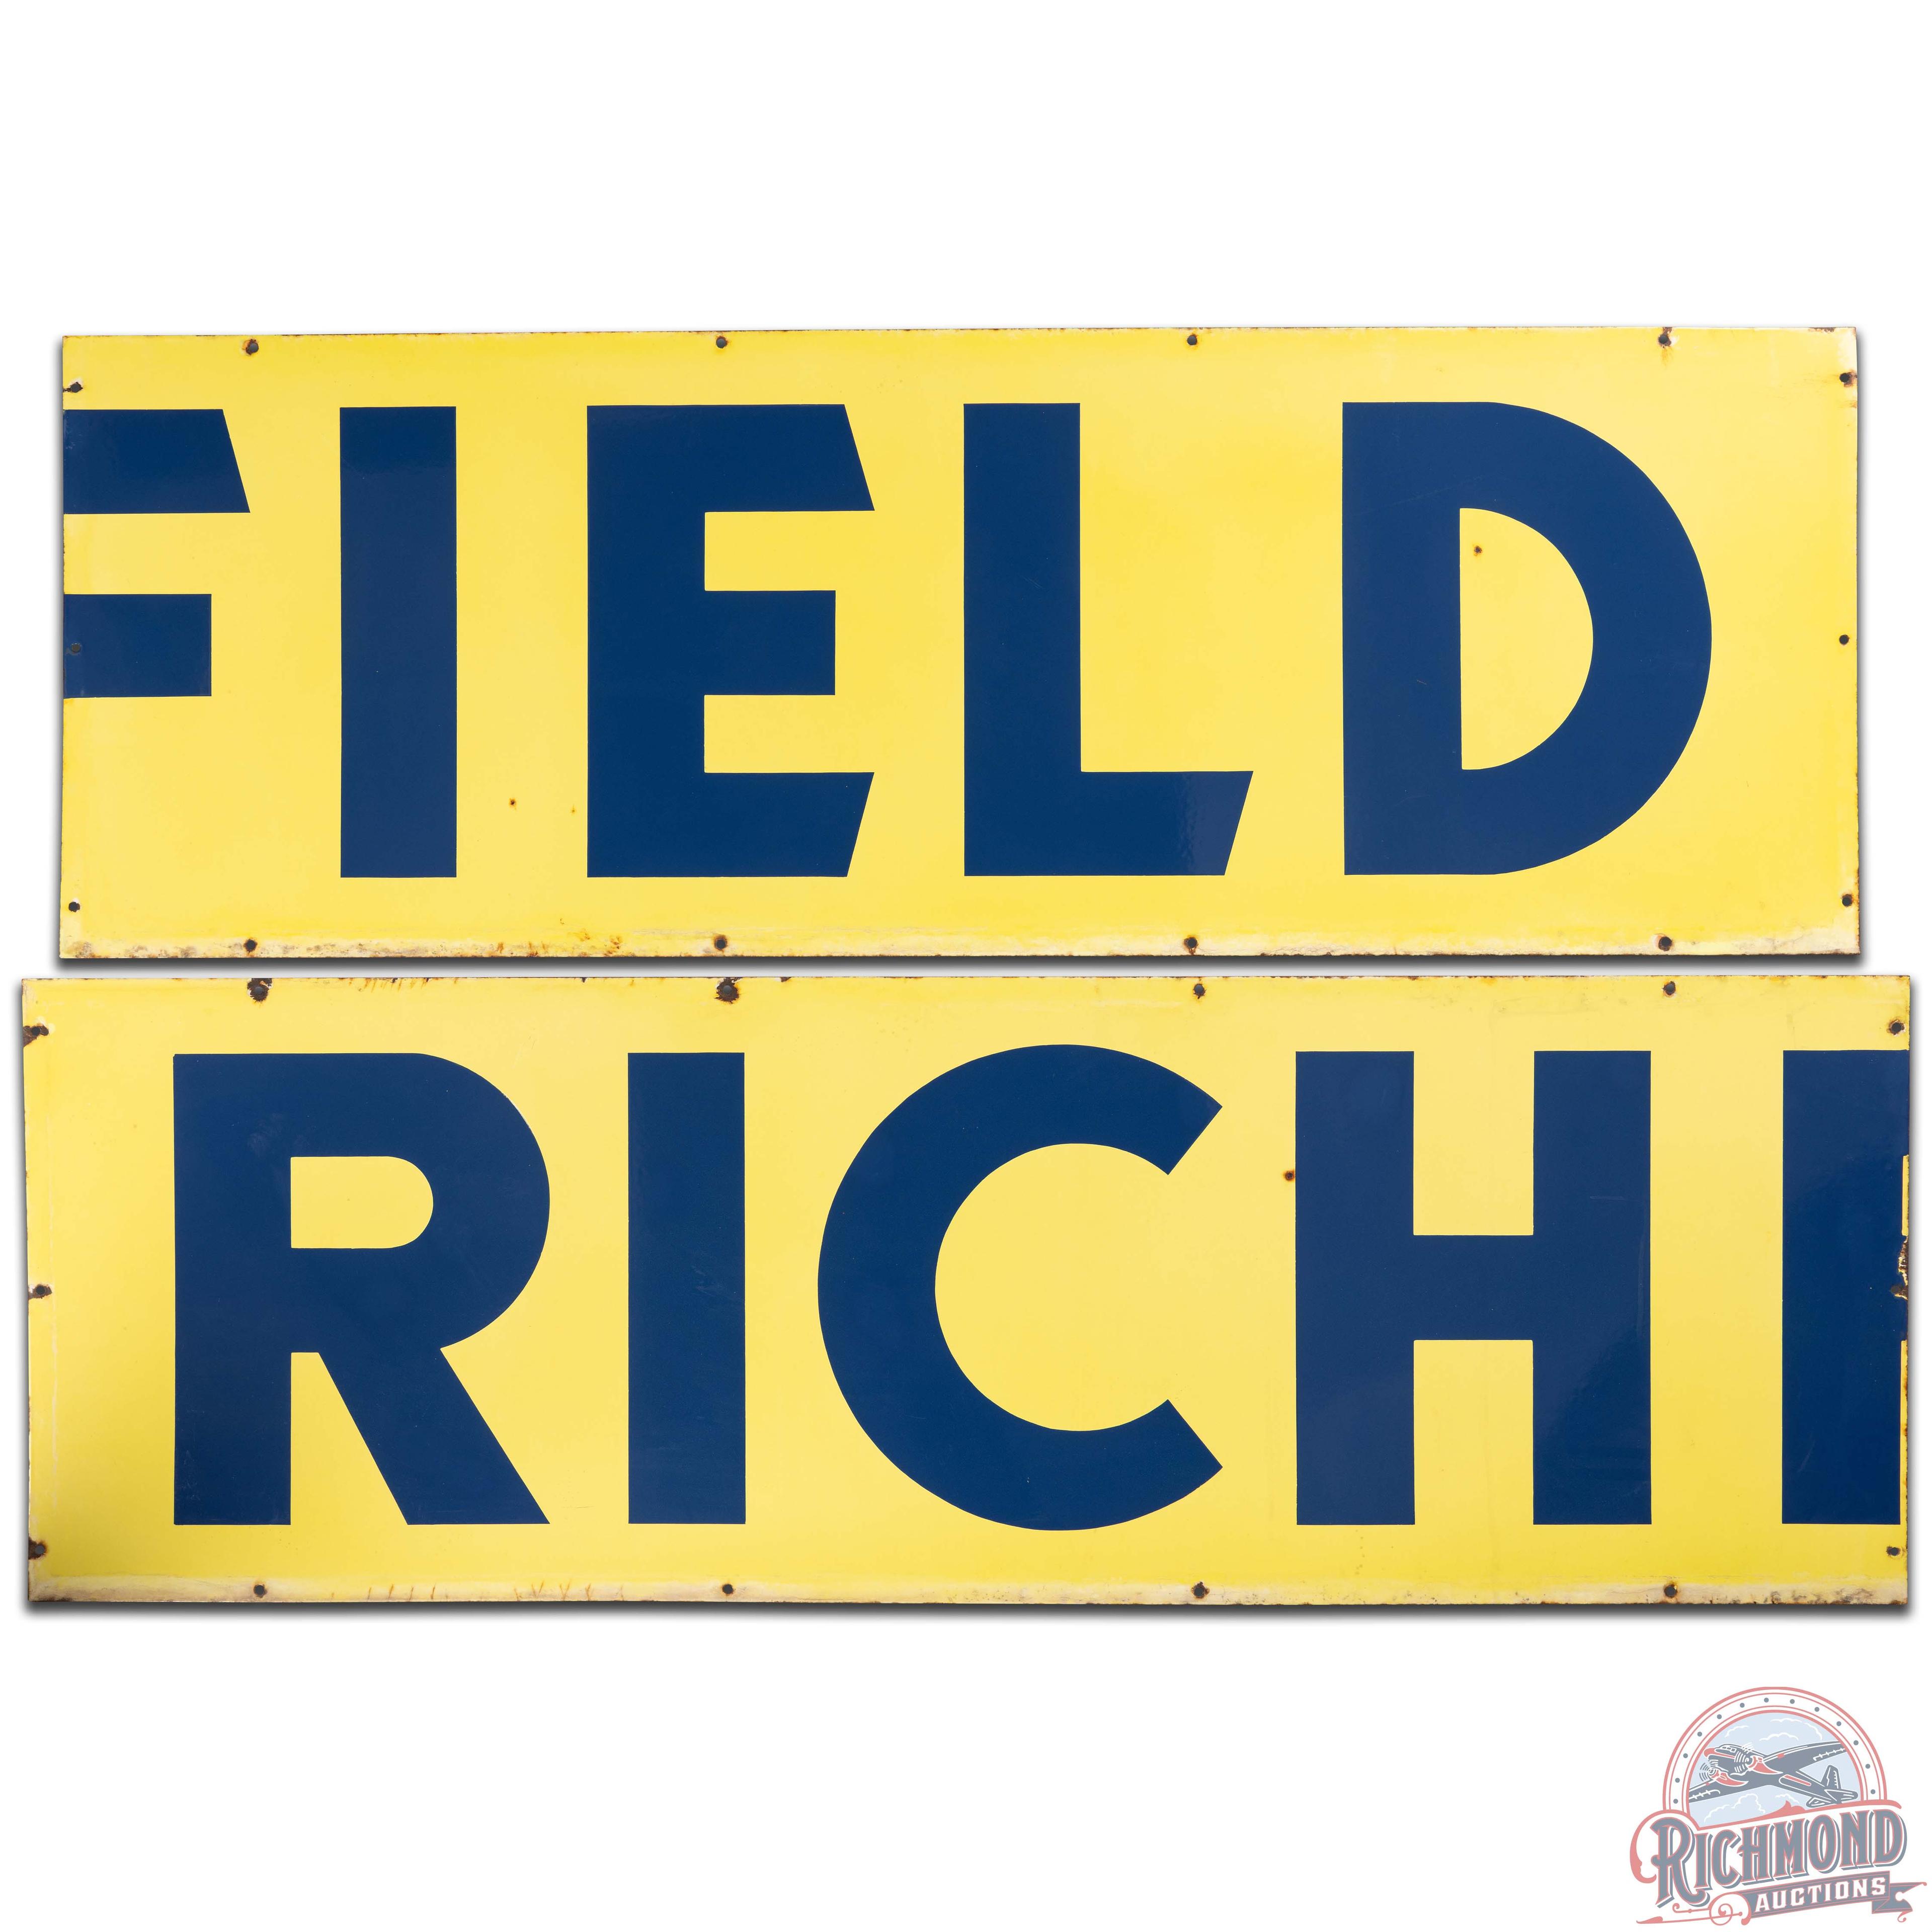 Richfield Gasoline 2-Piece DS Porcelain Station Sign